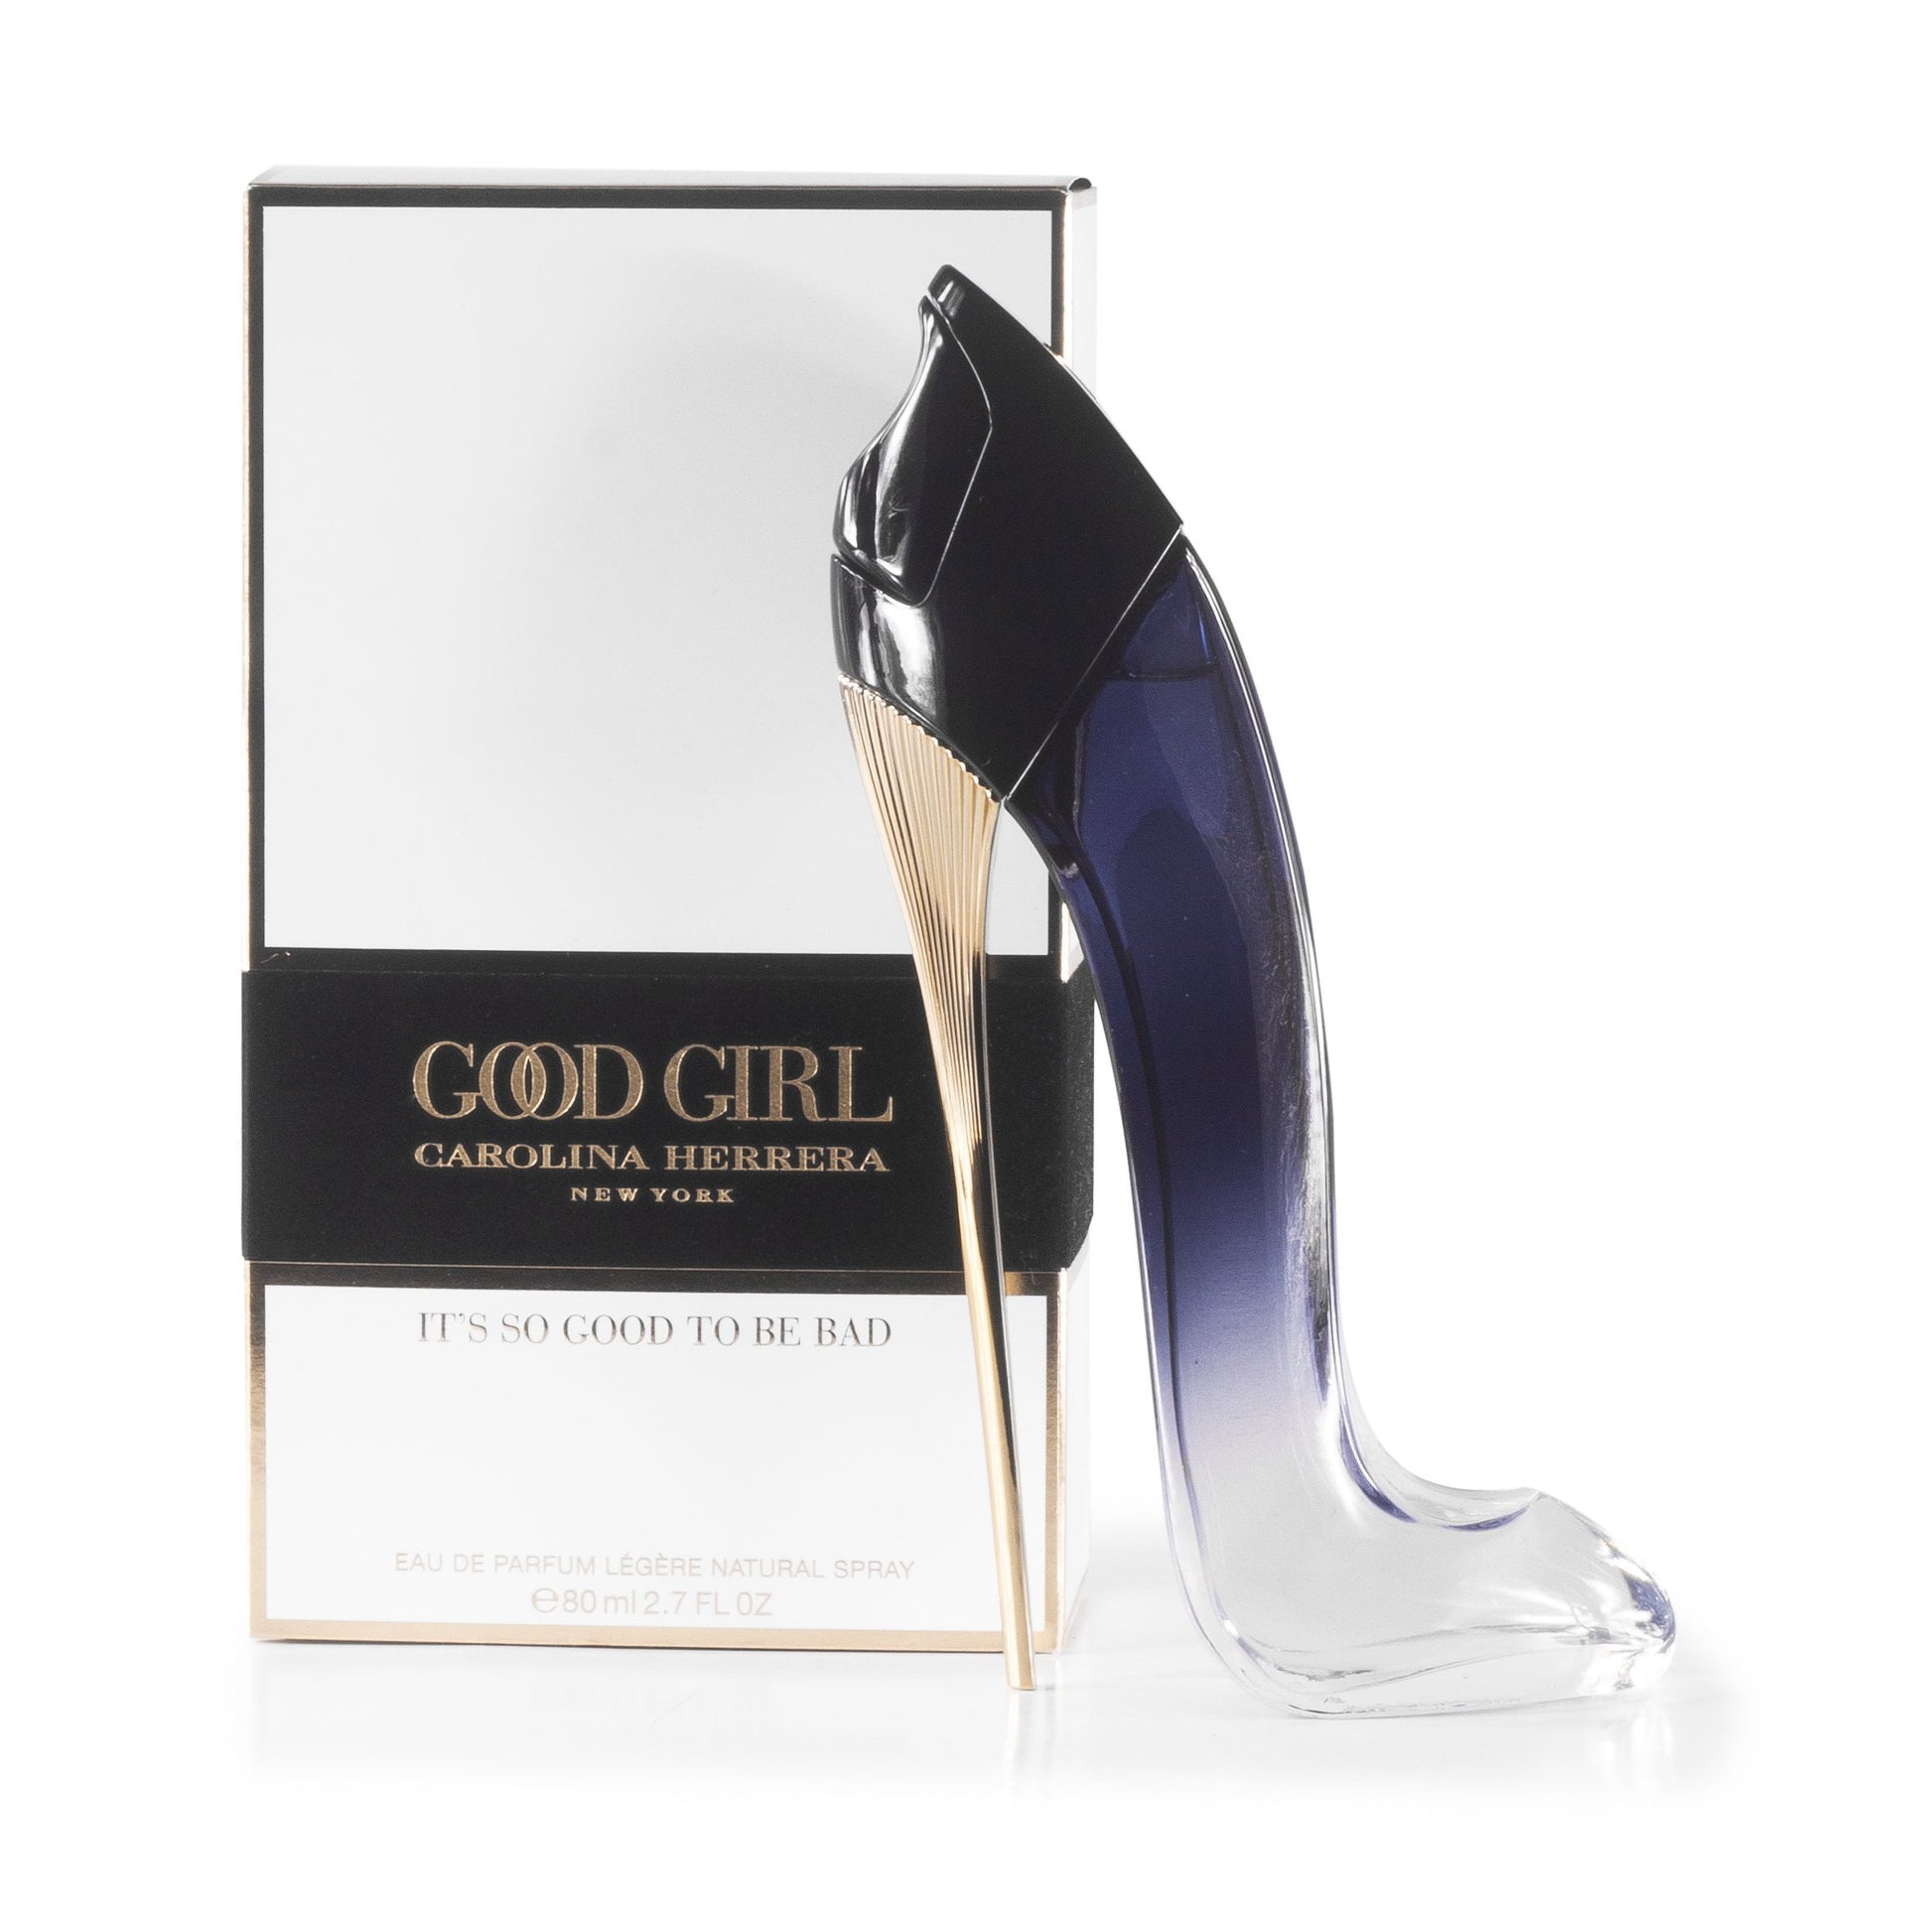 Best Good Girl Perfumes - Carolina Herrera [Full Review] 